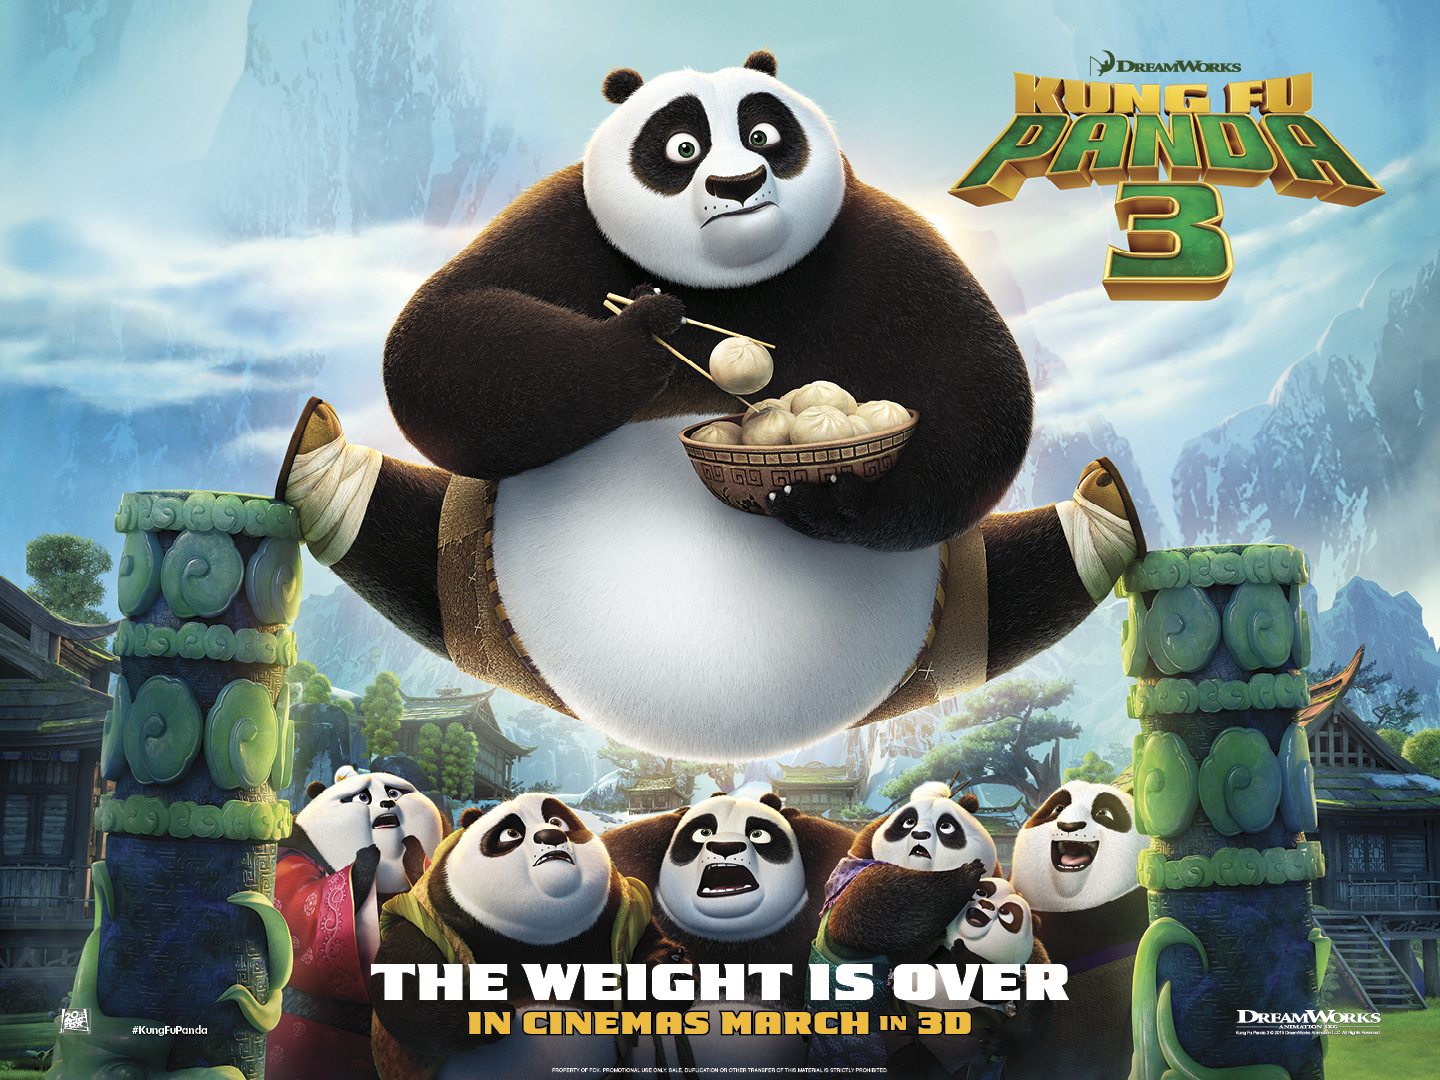 Kung Fu Panda 3 Backgrounds, Compatible - PC, Mobile, Gadgets| 1440x1080 px